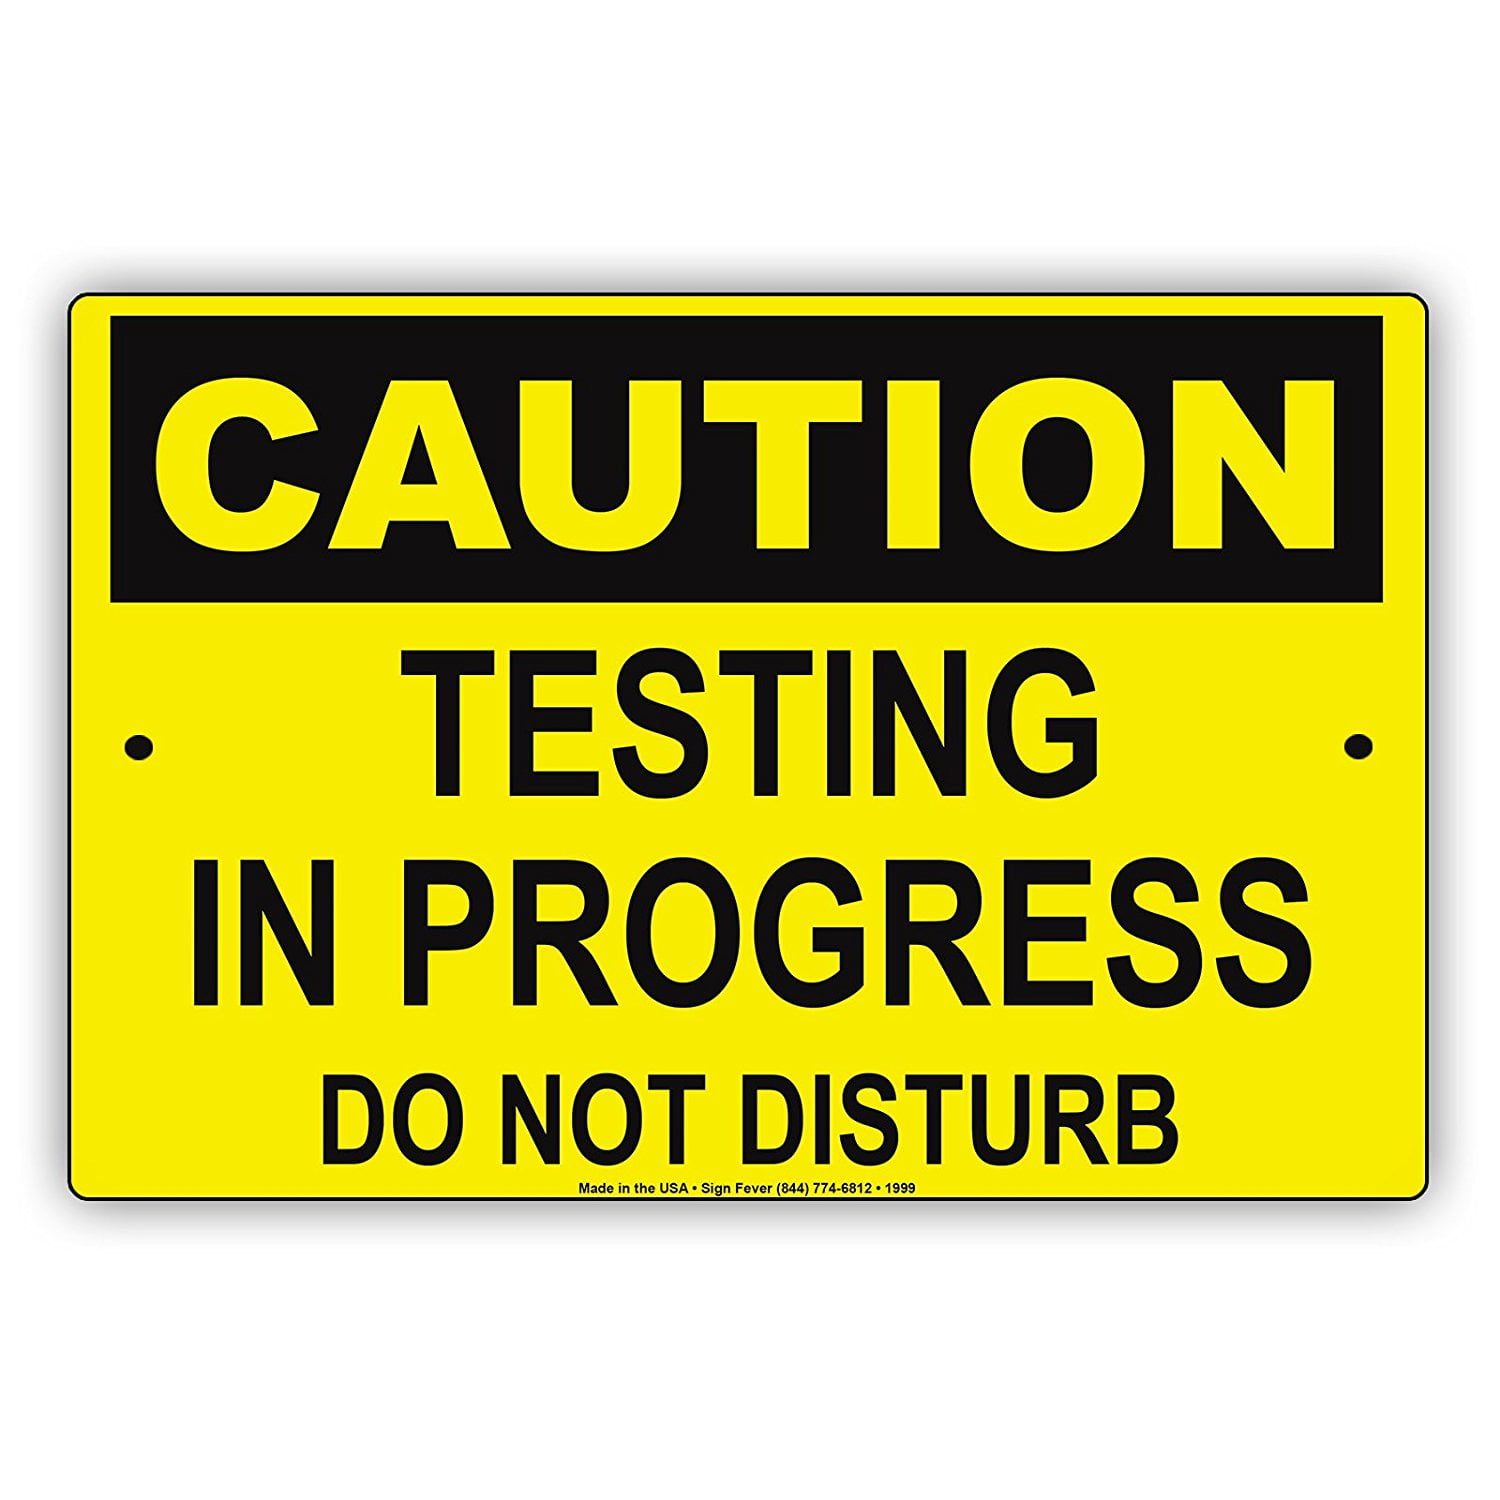 caution-testing-in-progress-do-not-disturb-laboratory-school-alert